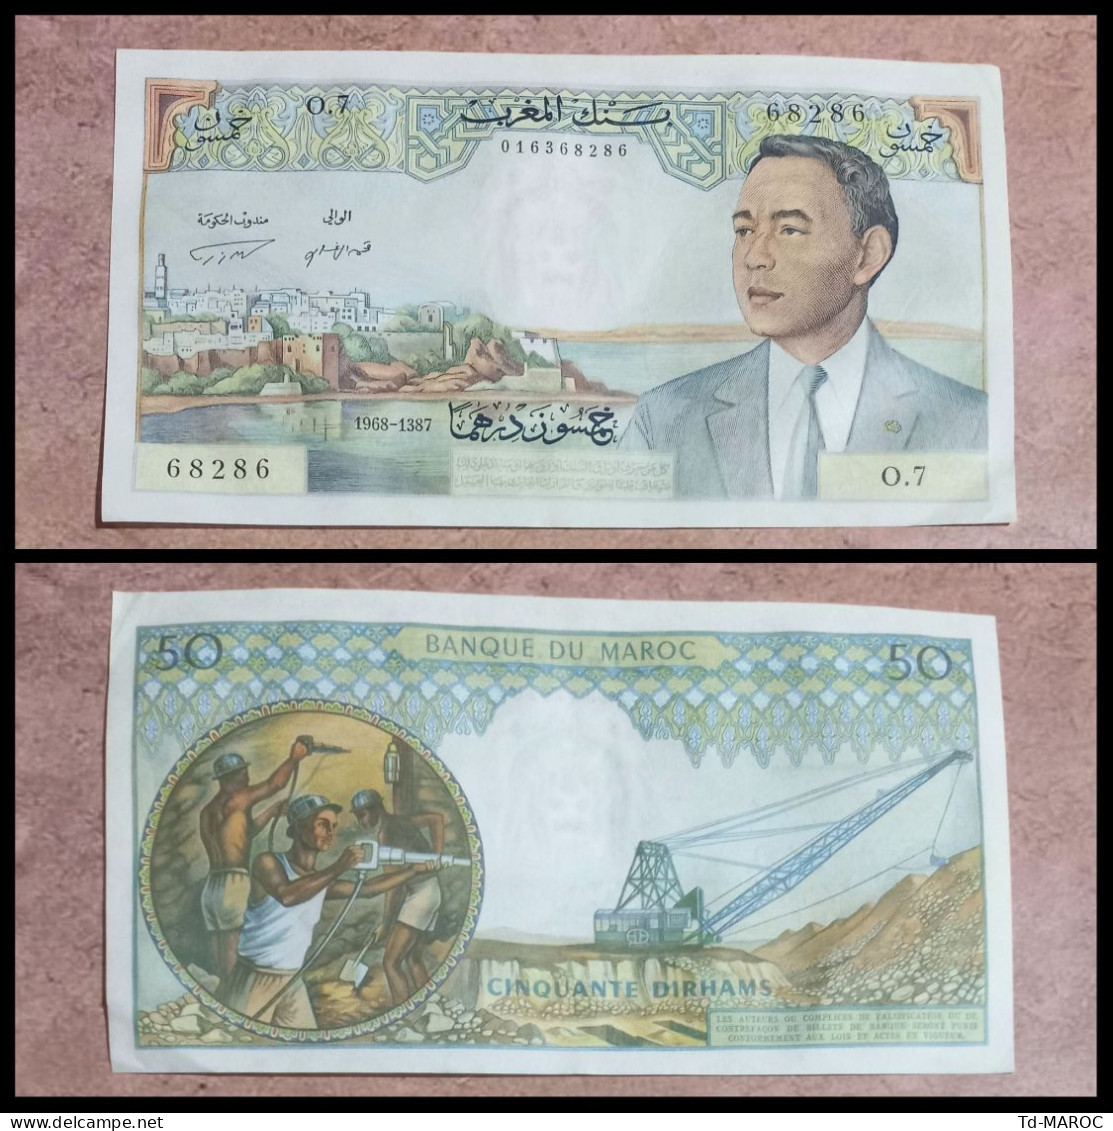 MAROC : Billet De 50 Dirhams 1968 P.55c / Alph.O.7 N° De Série RADAR 68286 - Morocco